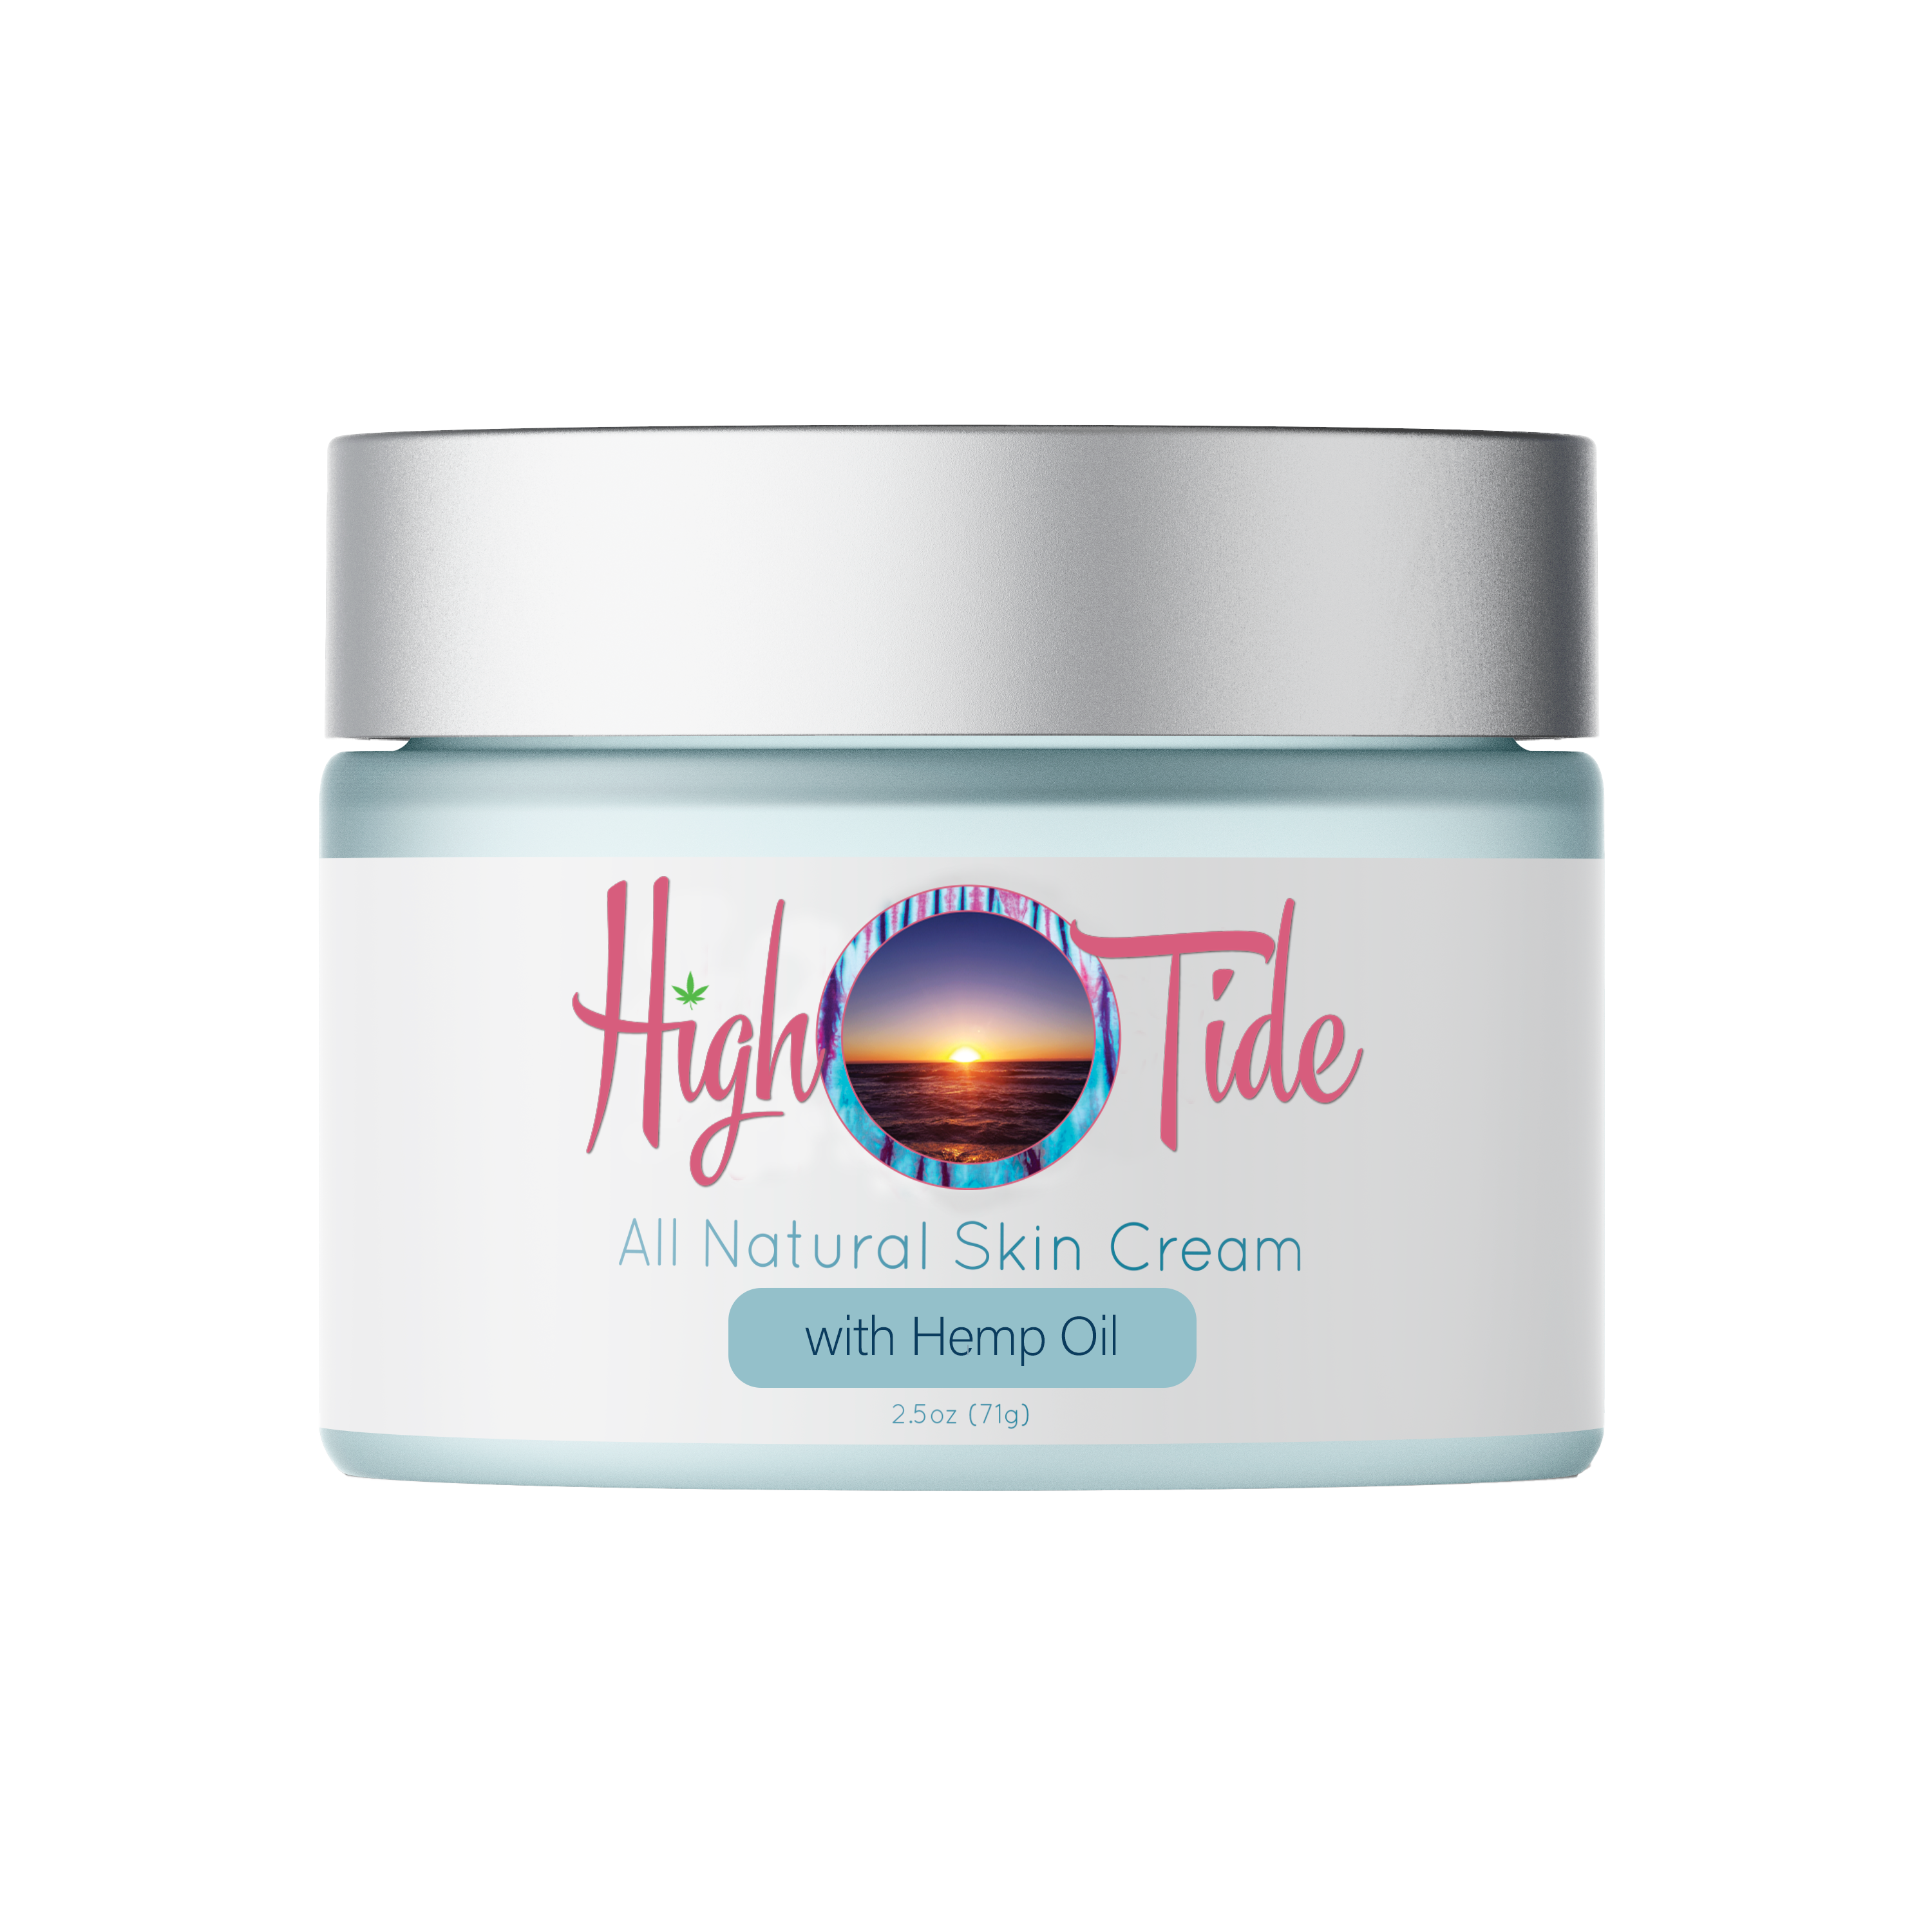 the original high tide cream with hemp oil